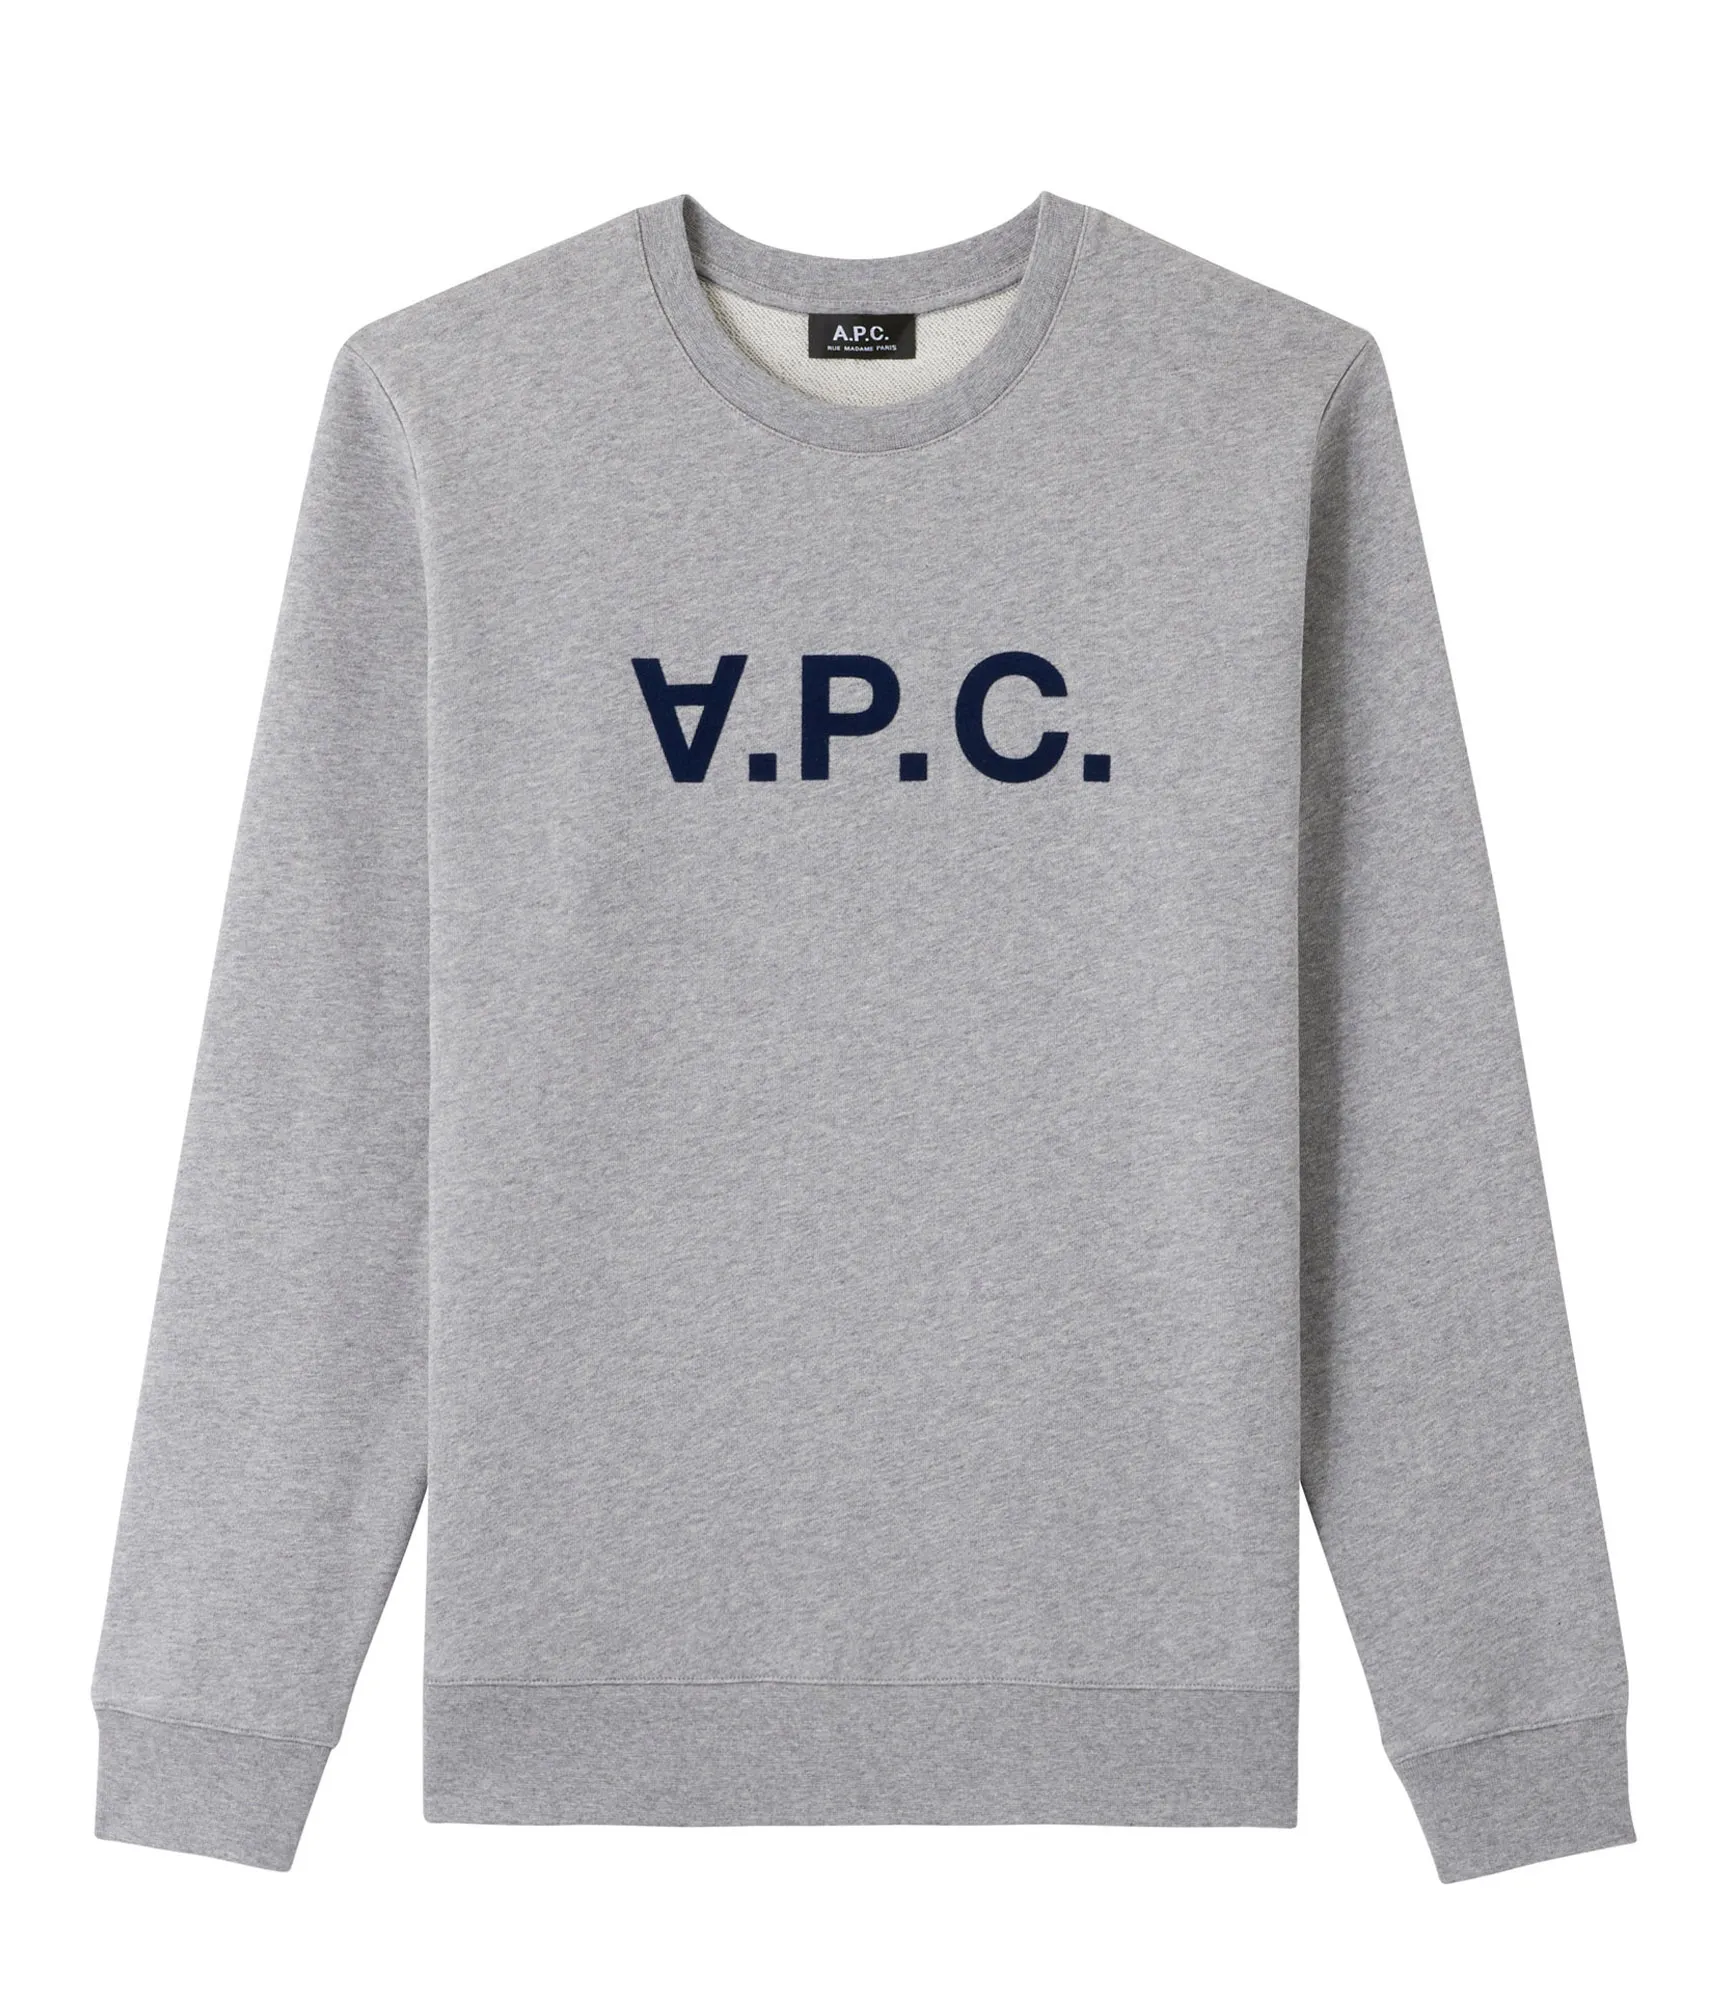 apc-sweatshirt-in-heather-grey-organic-cotton-with-a-dark-navy-blue-vpc-logo